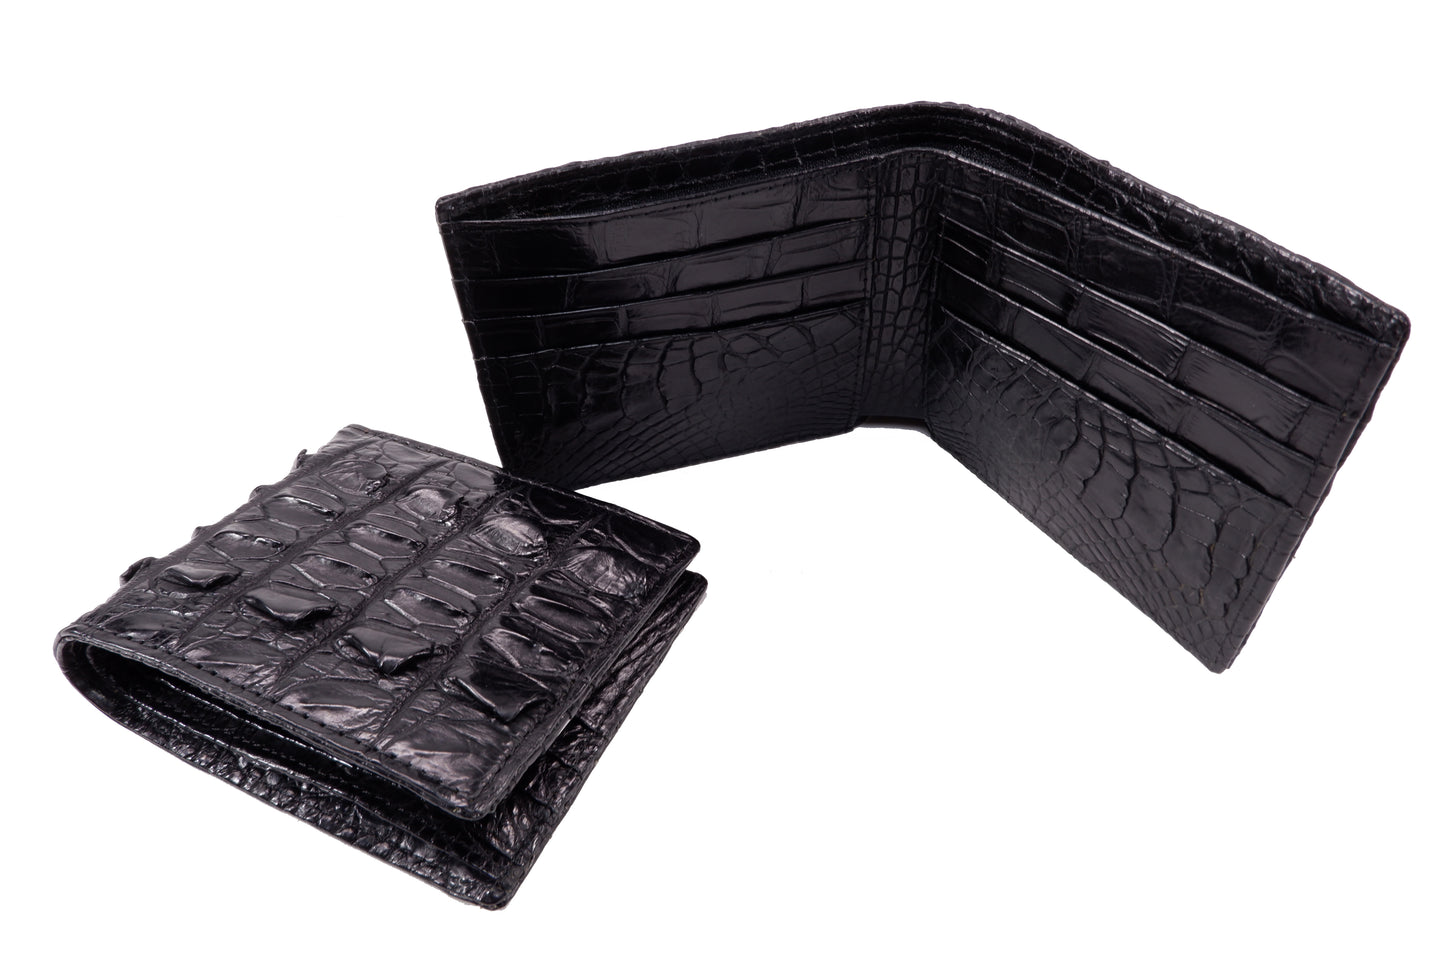 Genuine Crocodile Tail Skin Leather Bifold Wallet with Crocodile Skin Interior